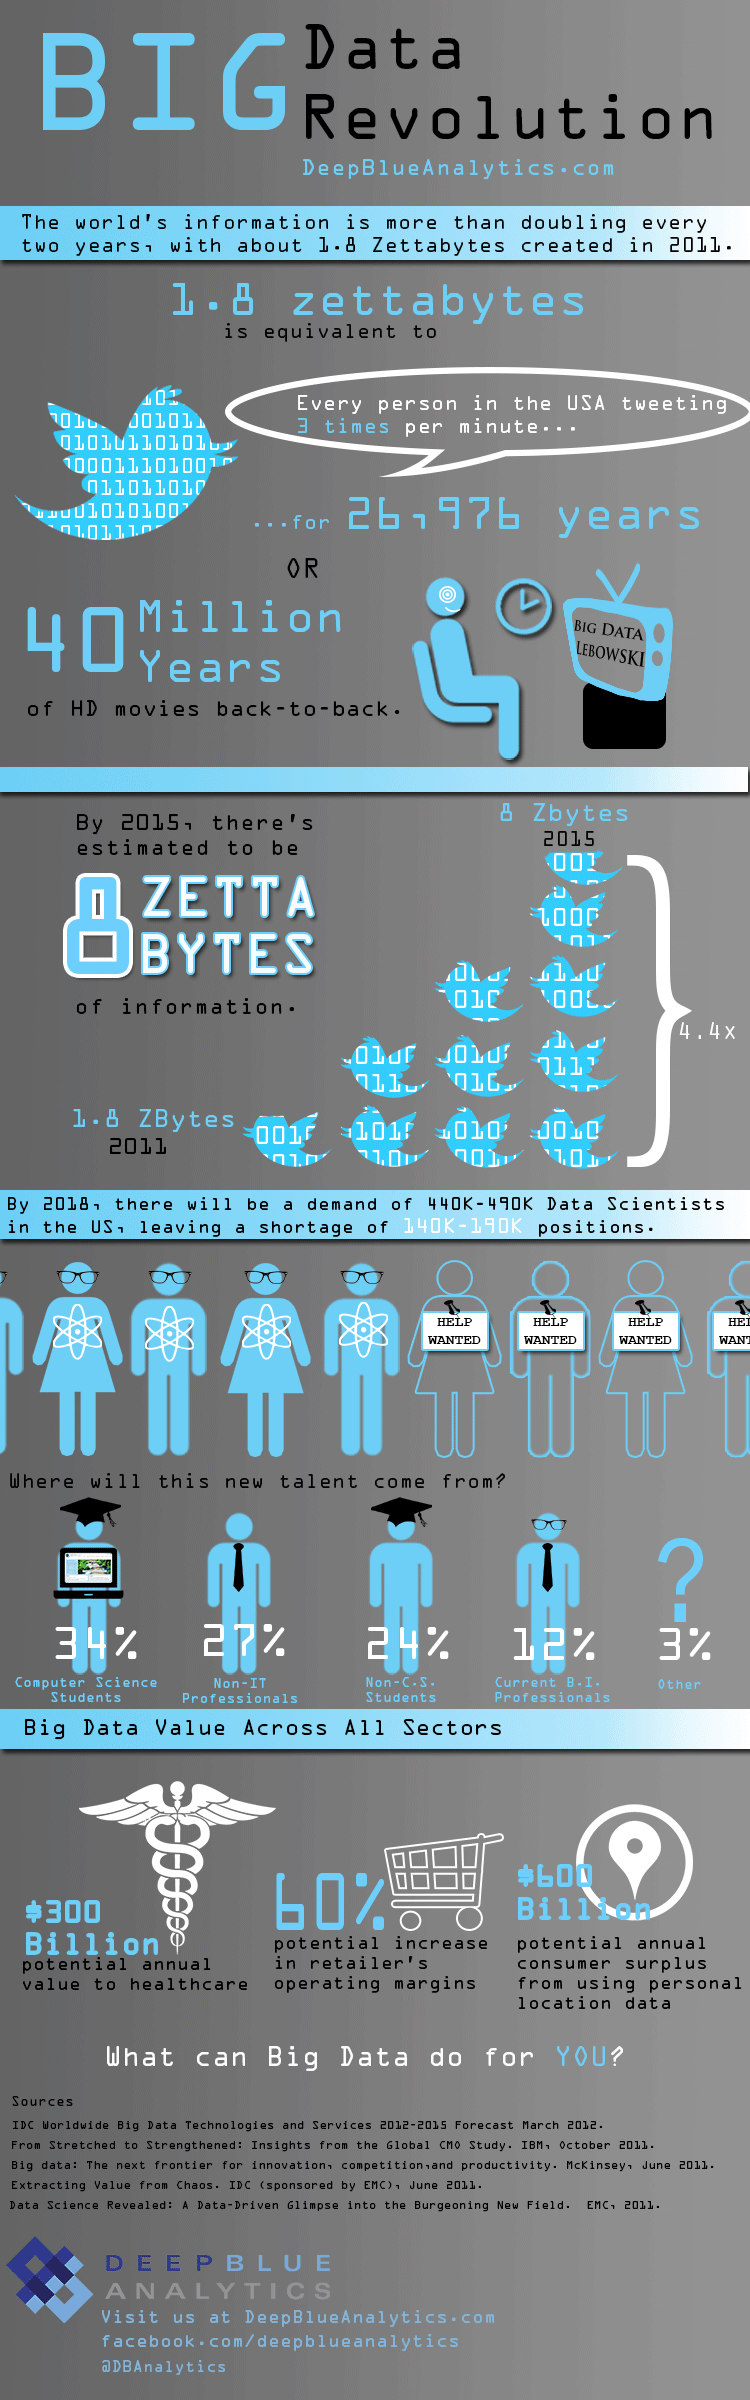 BIG Data Revolution Infographic